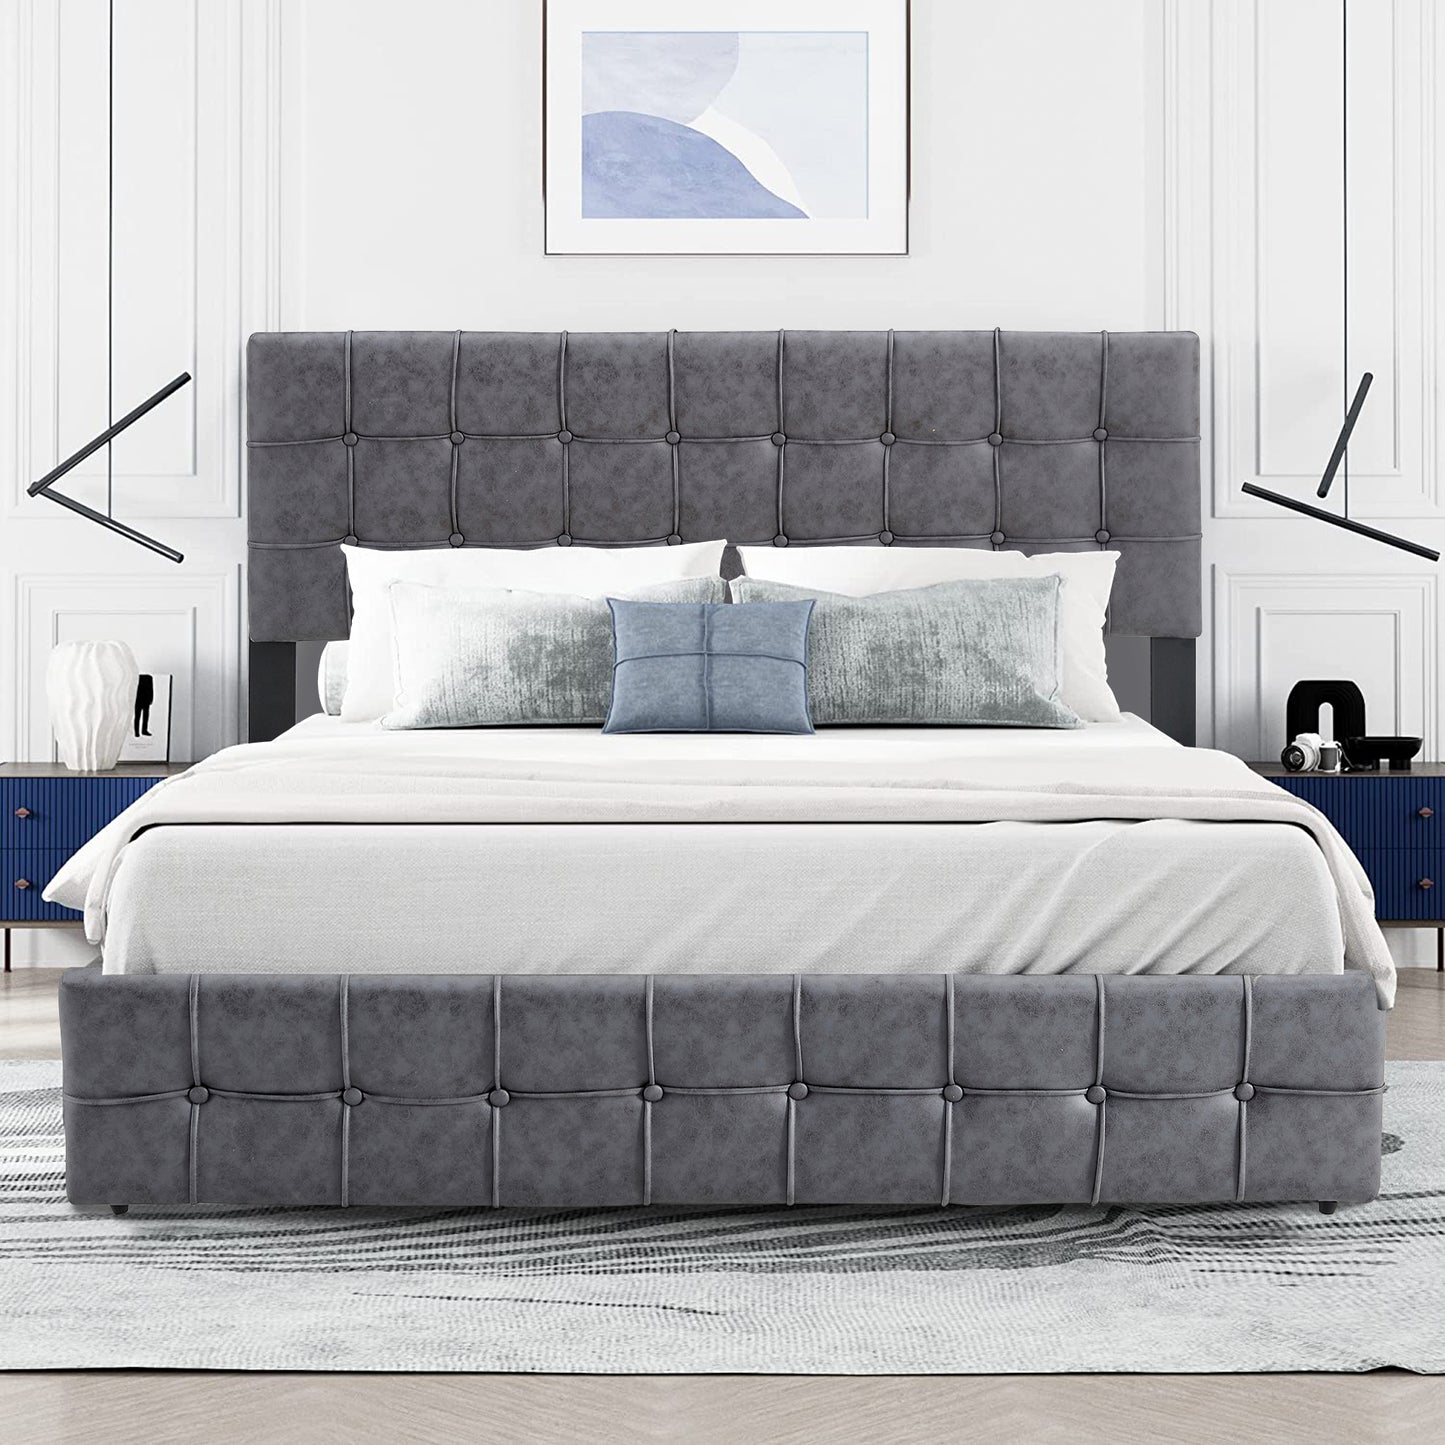 SYNGAR Queen Bed Frame, New Upgrade Queen Size Fabric Upholstered Platform Bed Frame with Elegant Headboard, Height Adjustable, Bedroom Furniture Platform Bed Frame, No Box Spring Needed, Gray